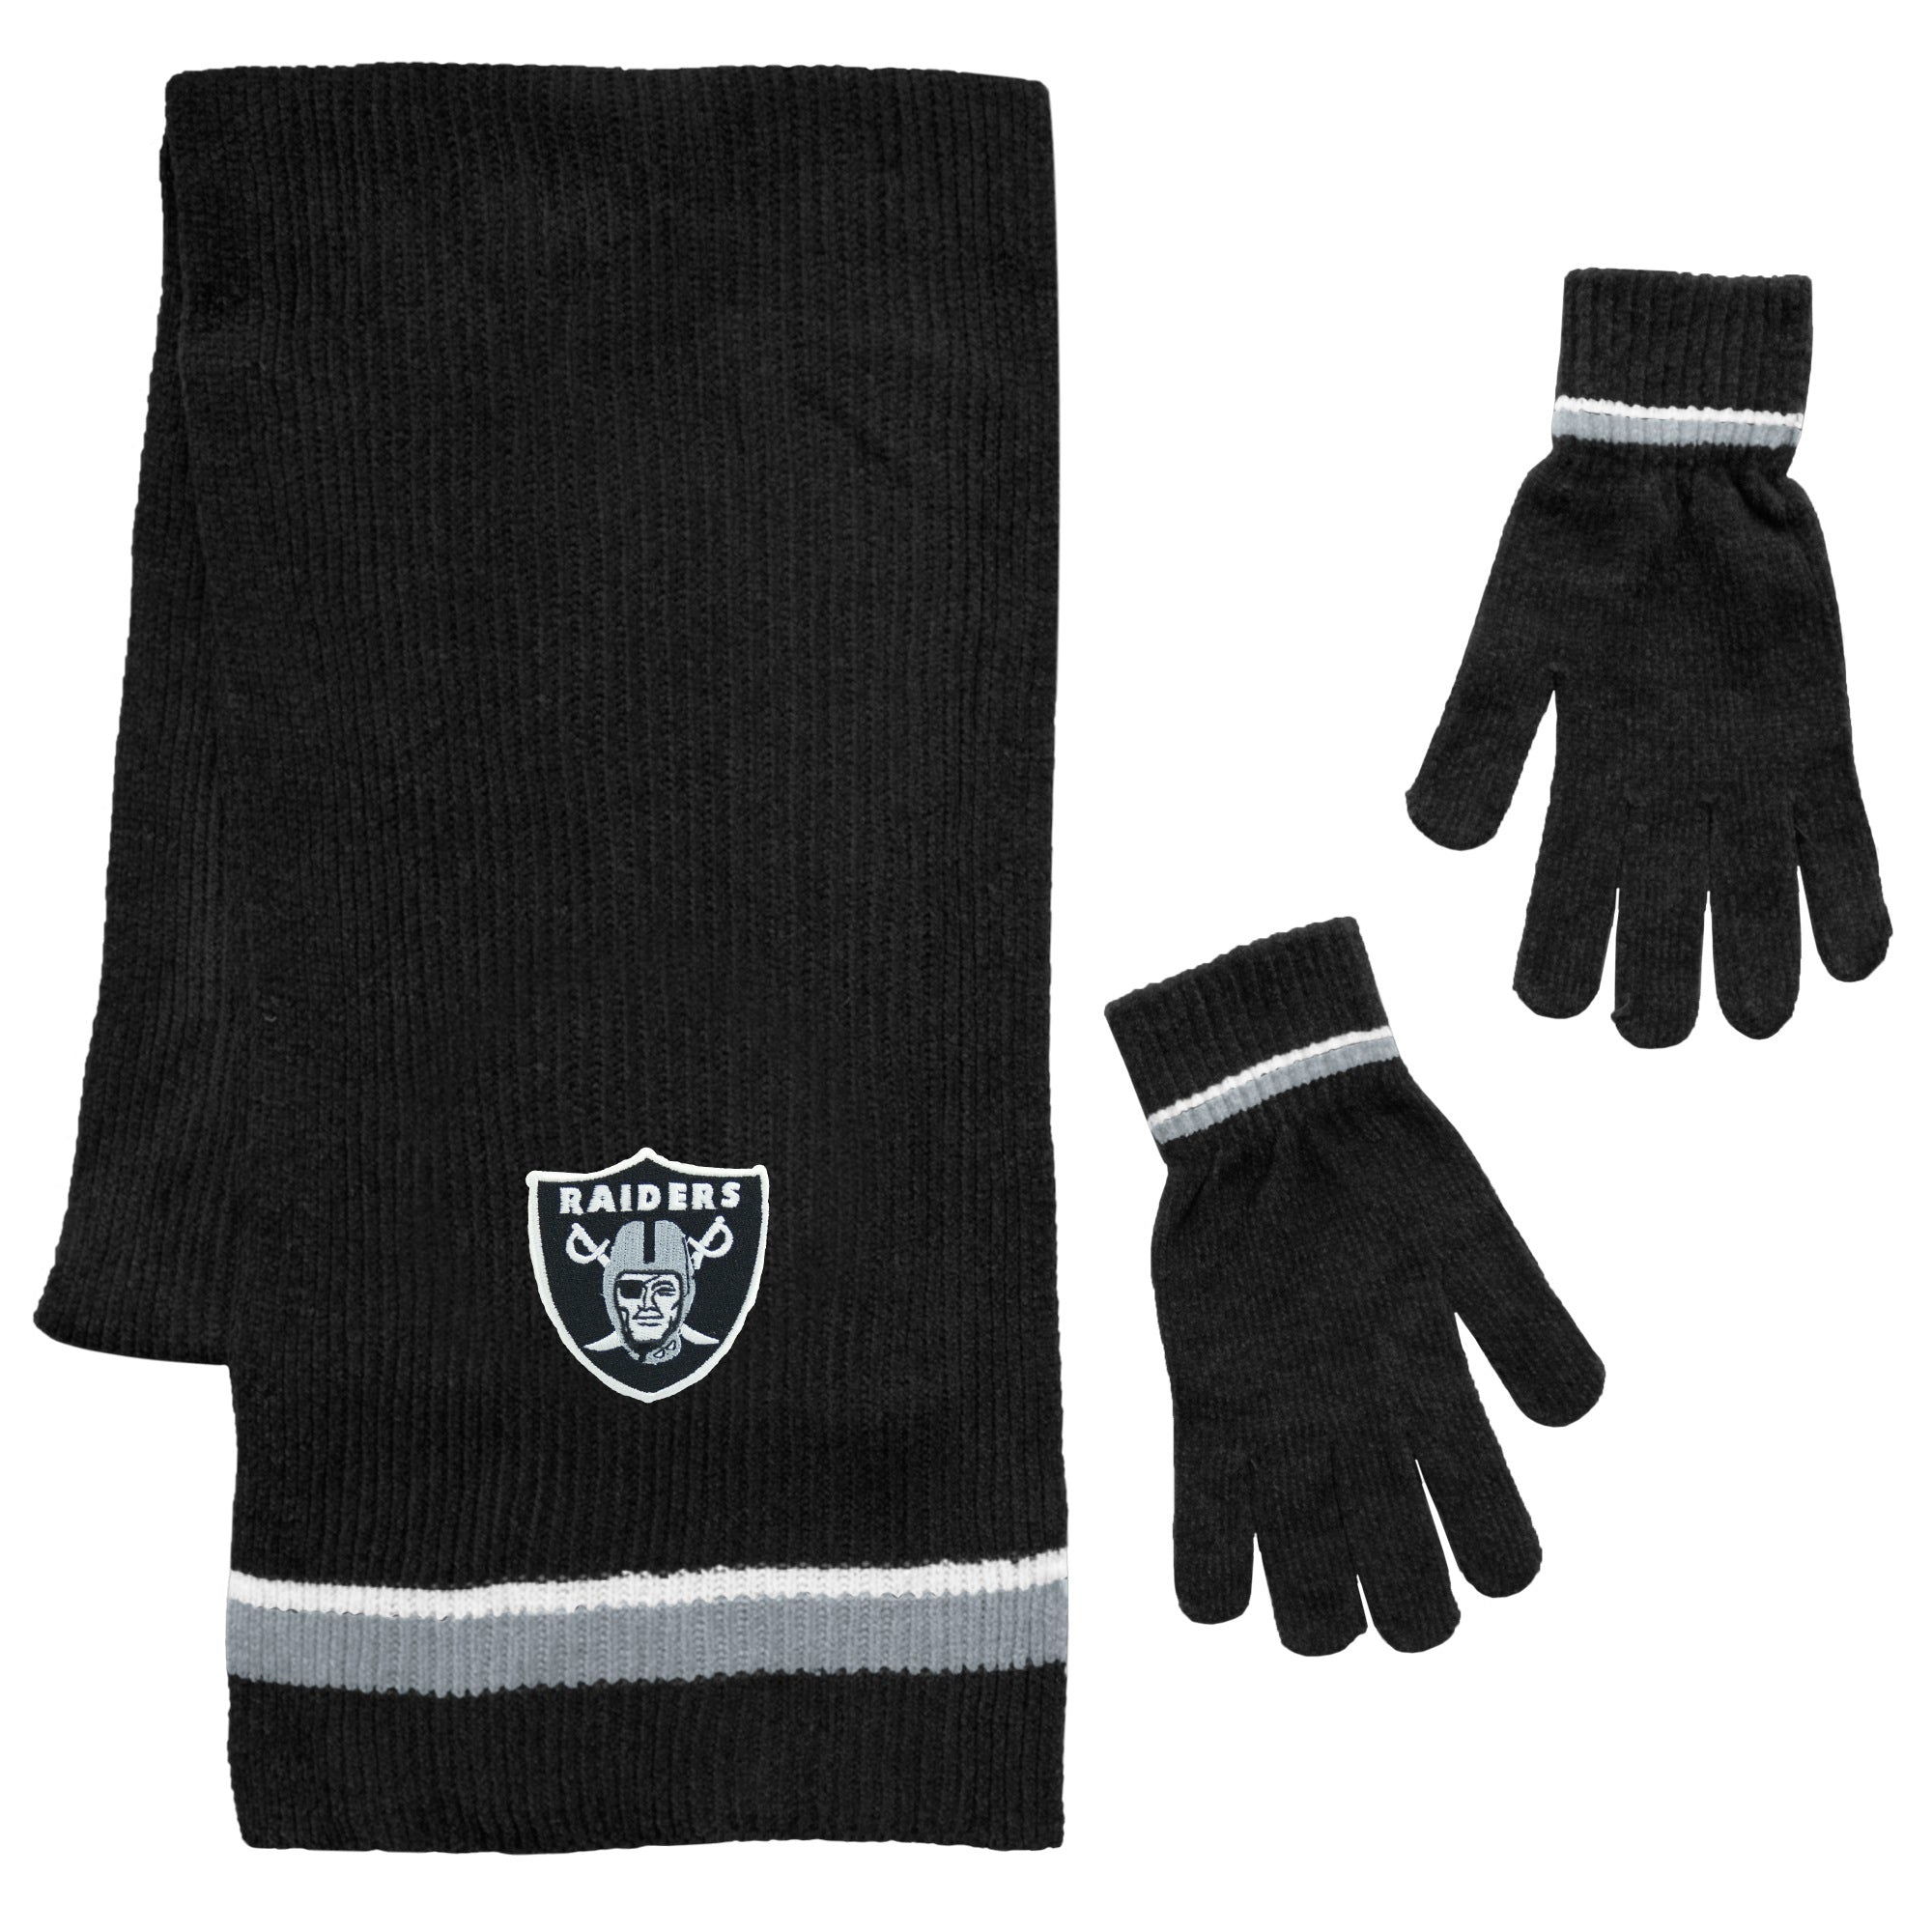 Las Vegas Raiders Scarf and Glove Gift Set - Team Spirit Store USA 